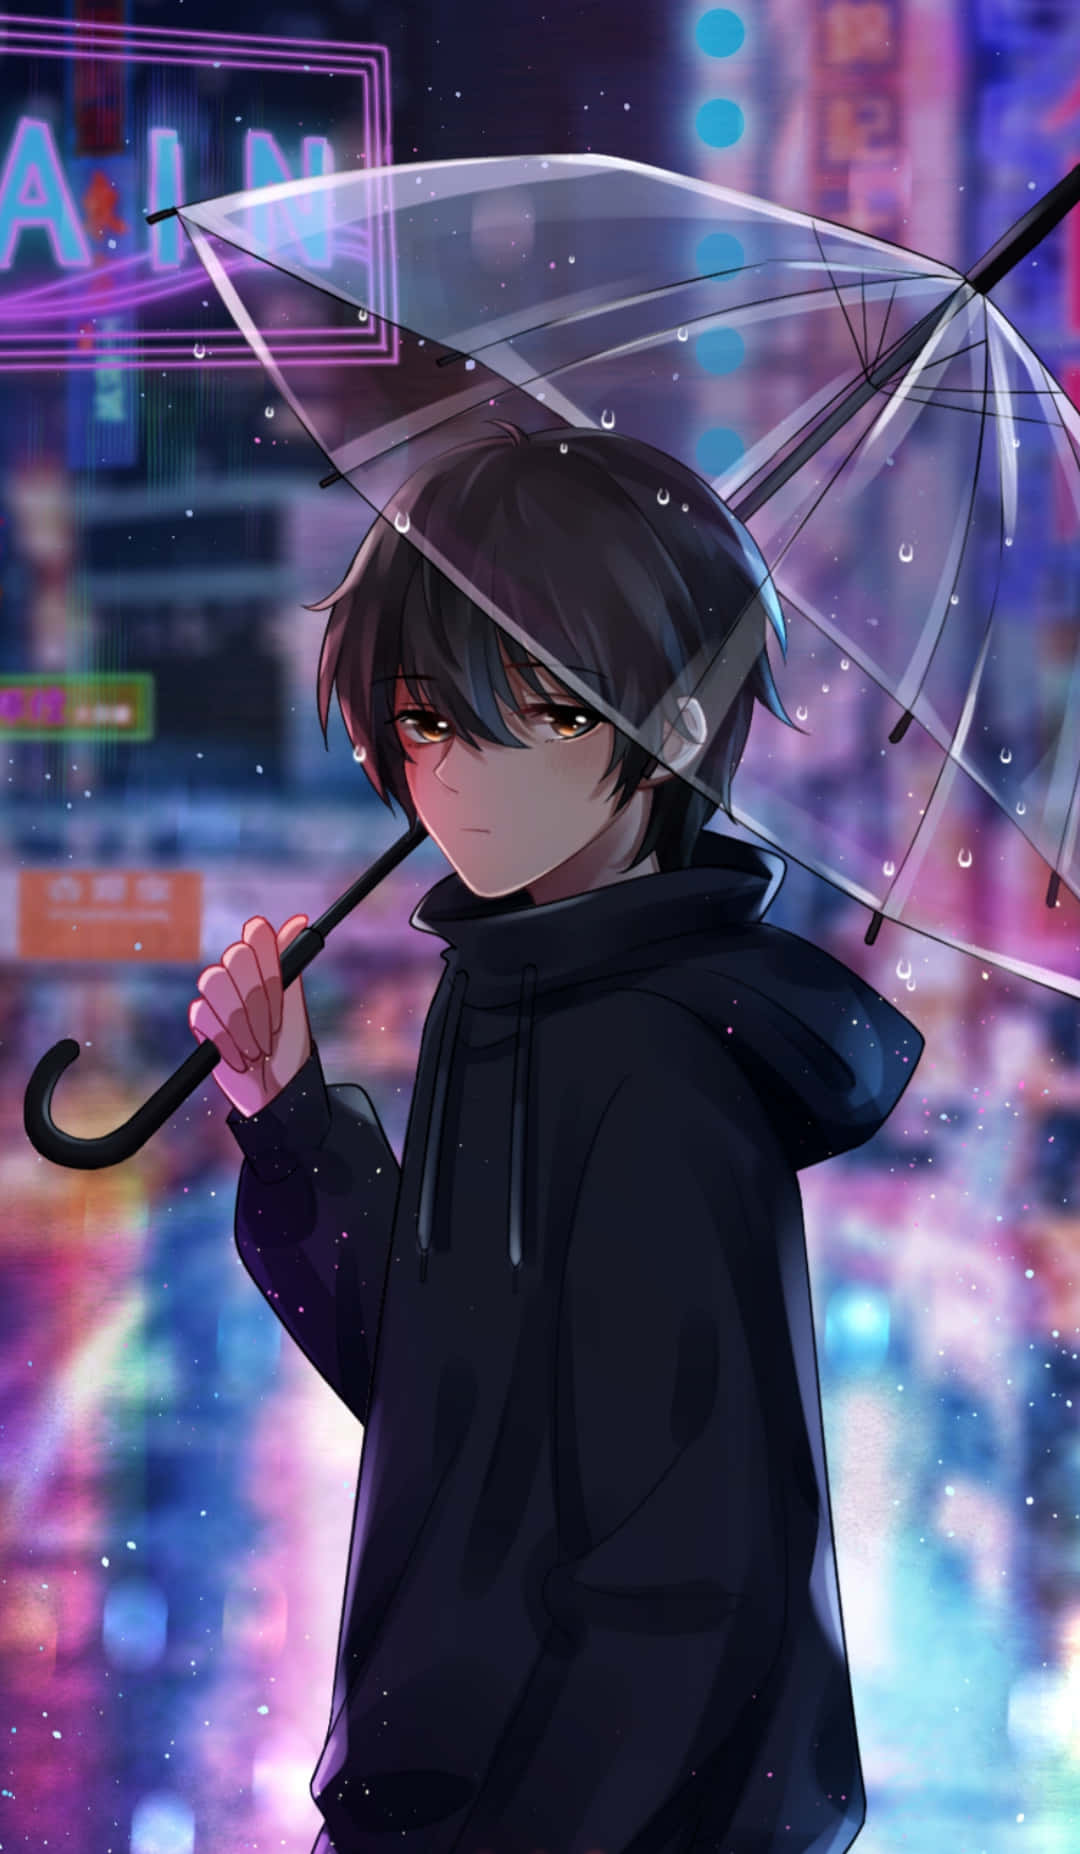 Anime Boy With Umbrella Phone Wallpaper